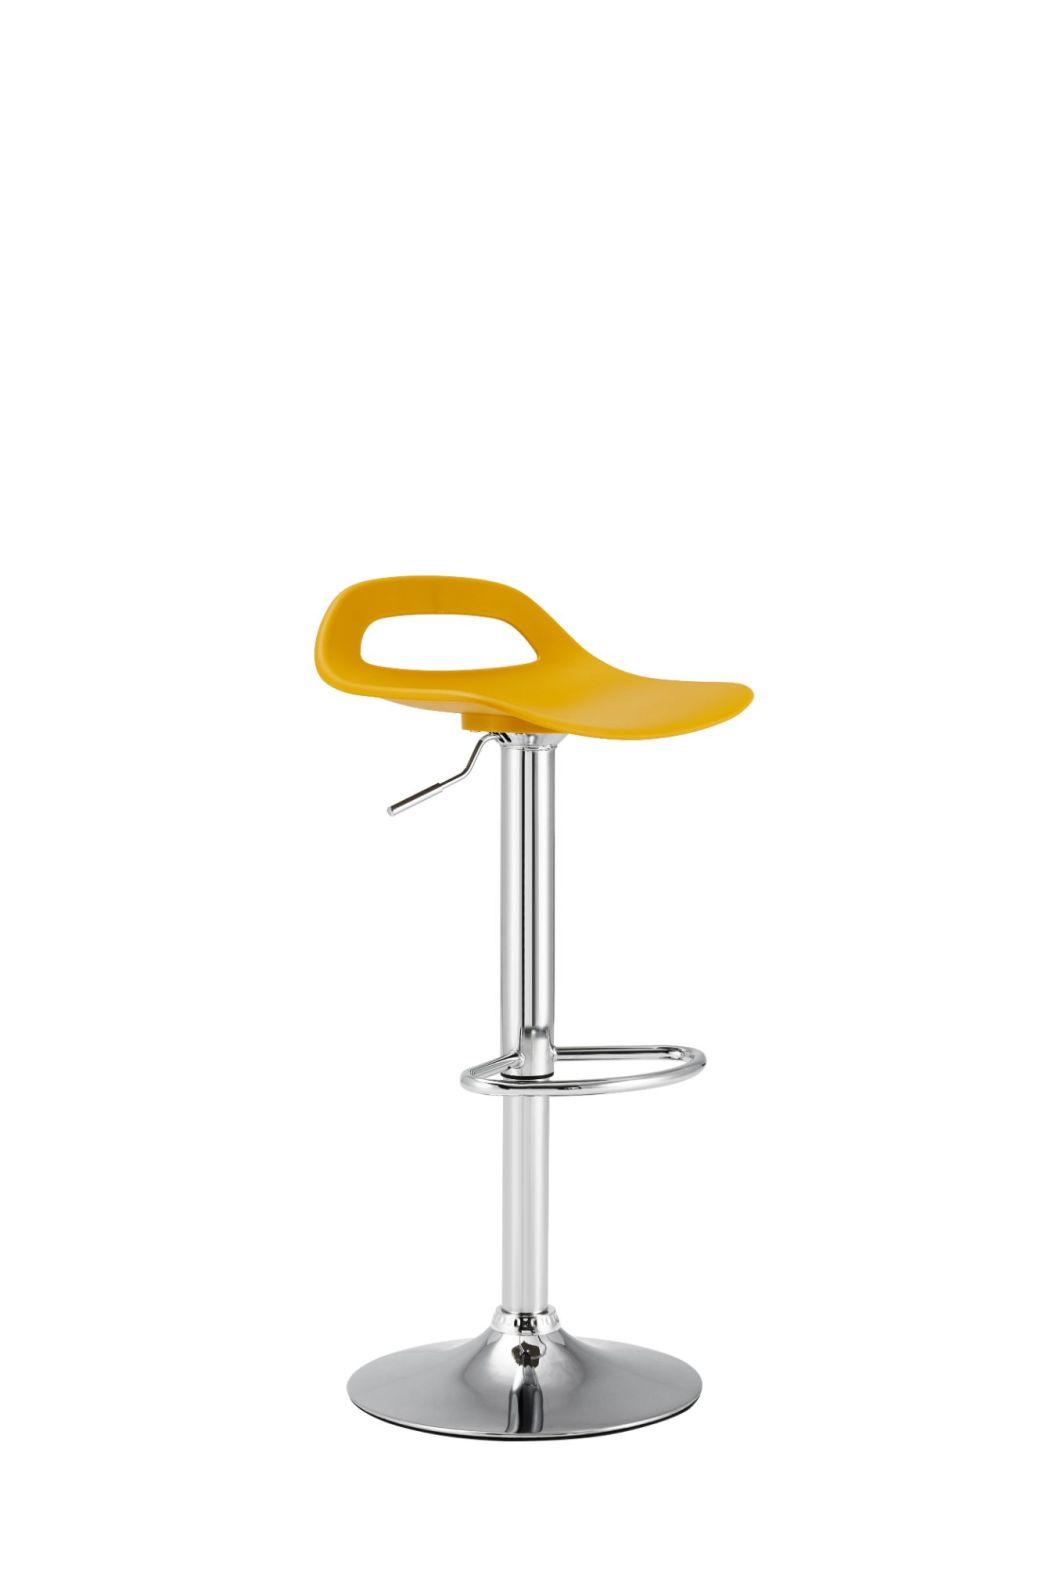 Nordic Modern Design Stainless Steel Legs PP Plastic Seat High Bar Chair